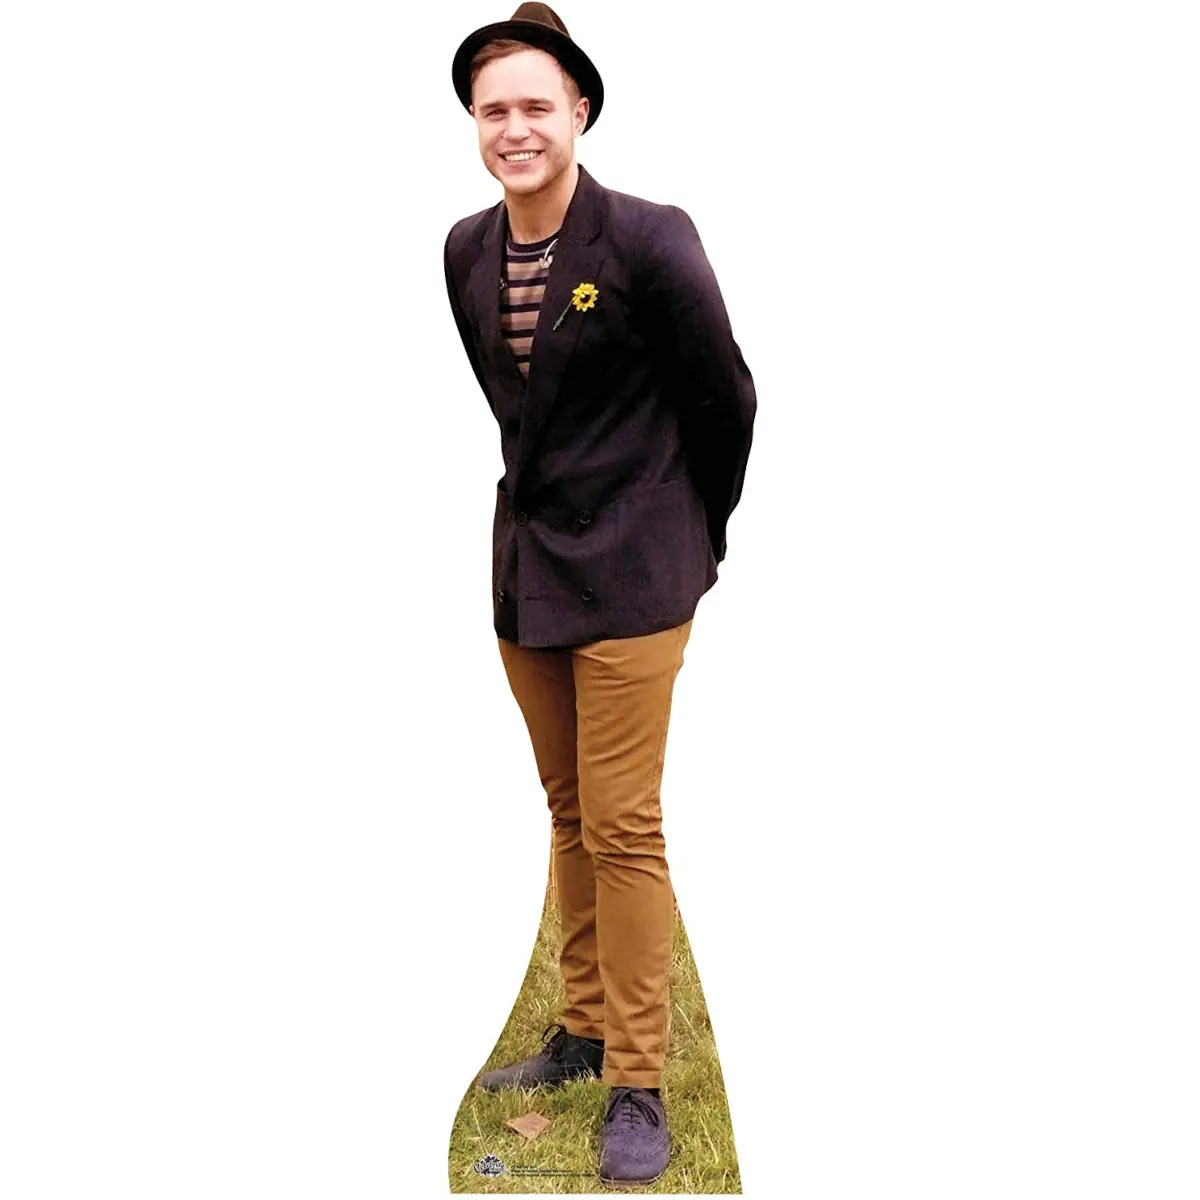 CS456 Olly Murs Jacket Hat English Singer Songwriter Lifesize Cardboard Cutout Standee